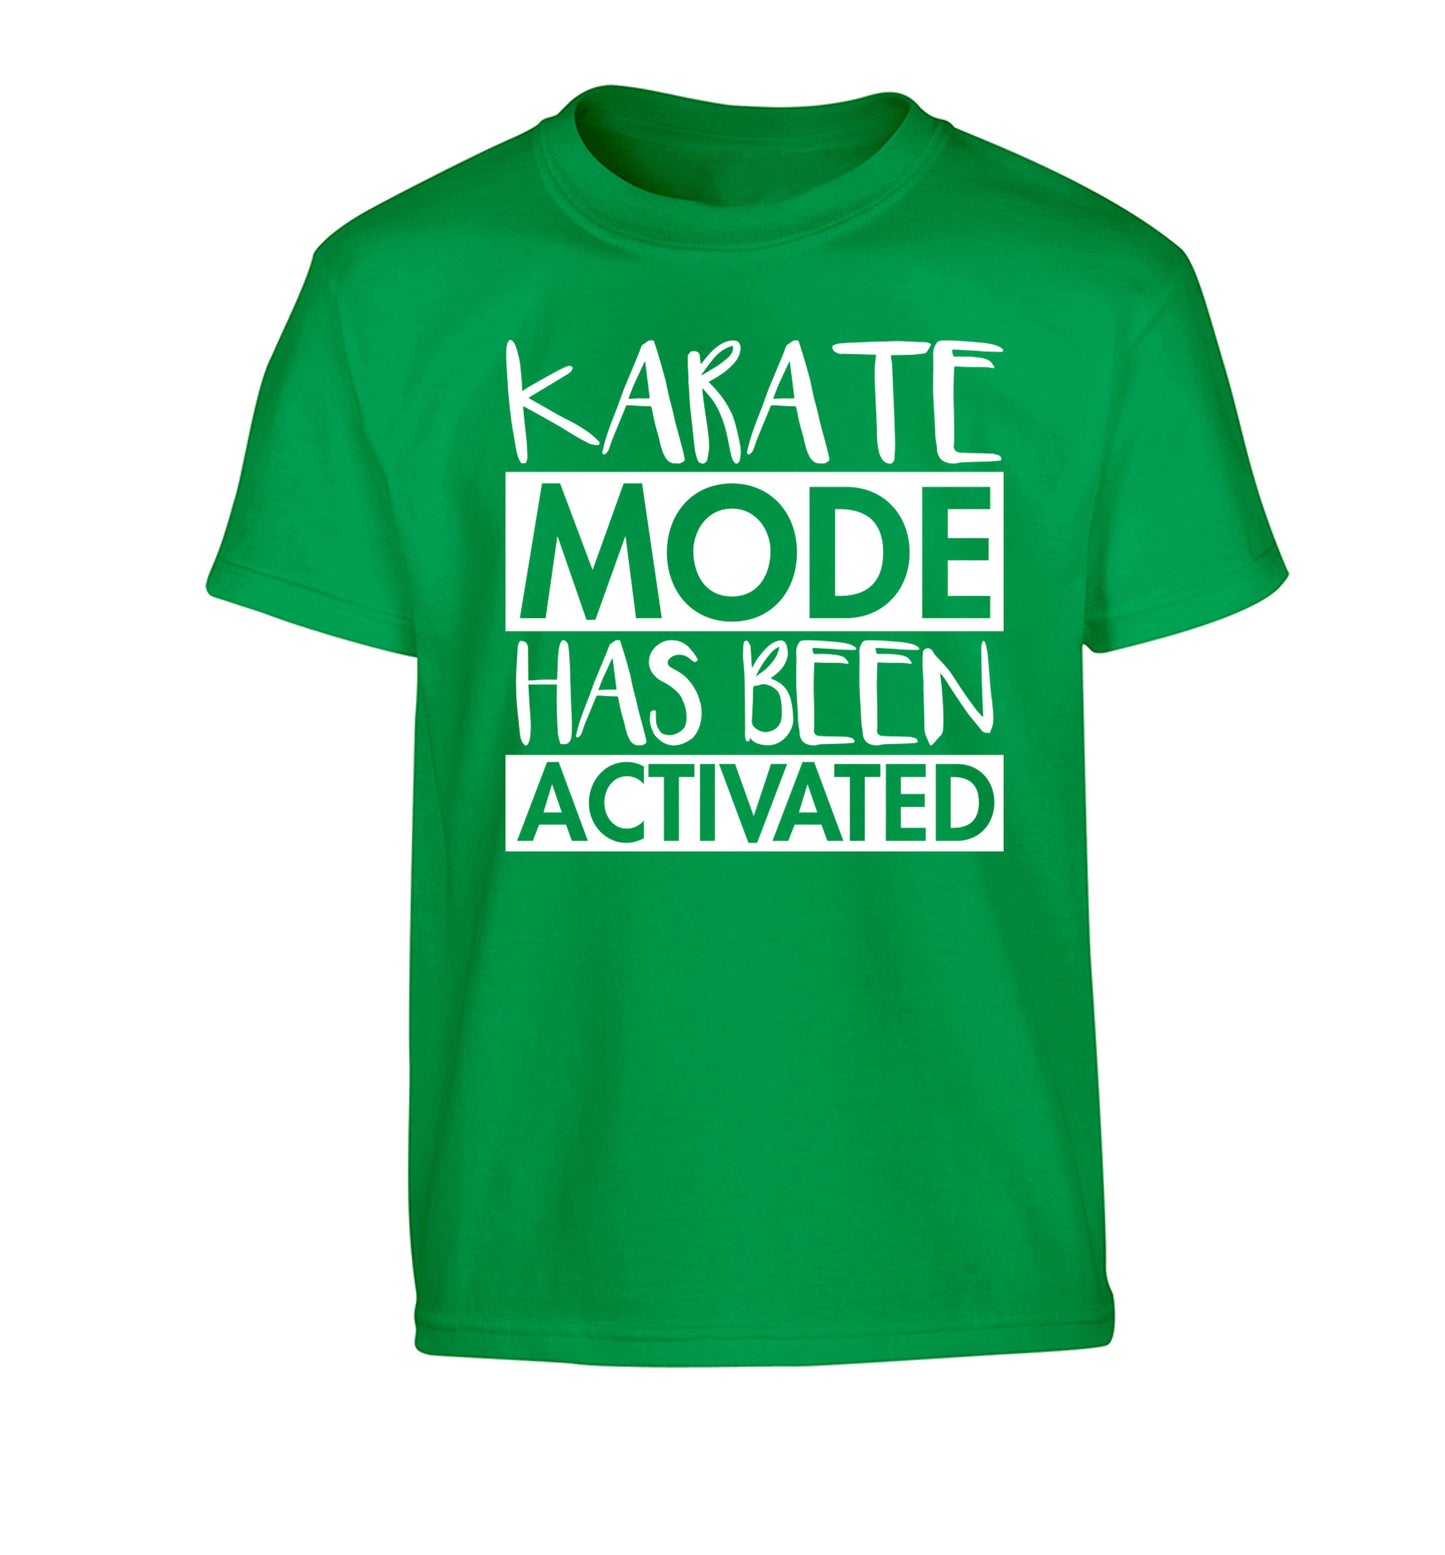 Karate mode activated Children's green Tshirt 12-14 Years